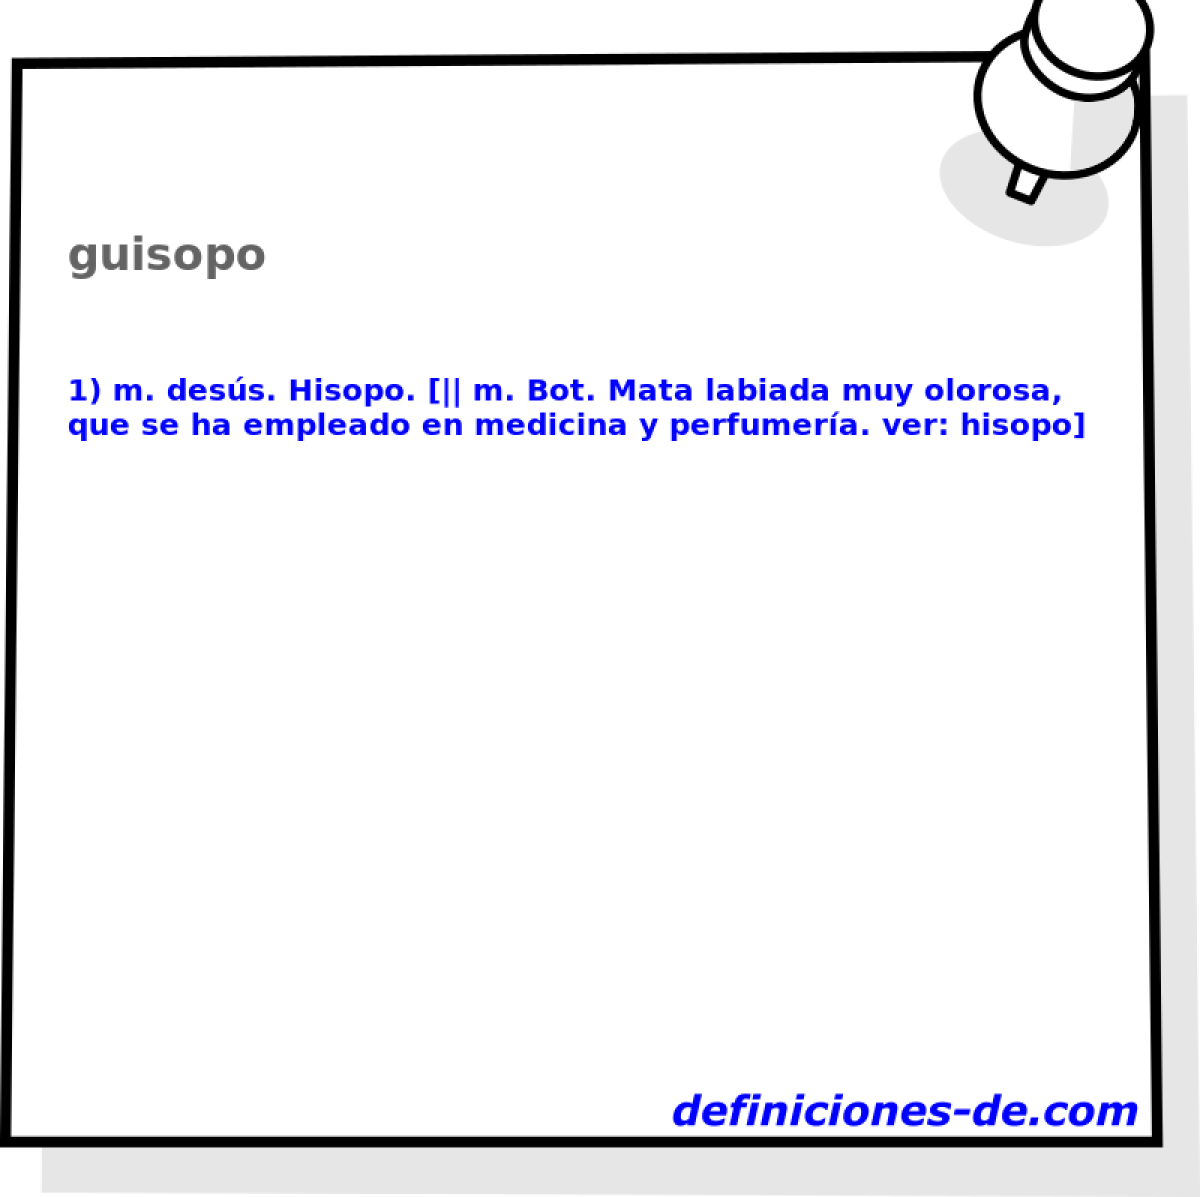 guisopo 